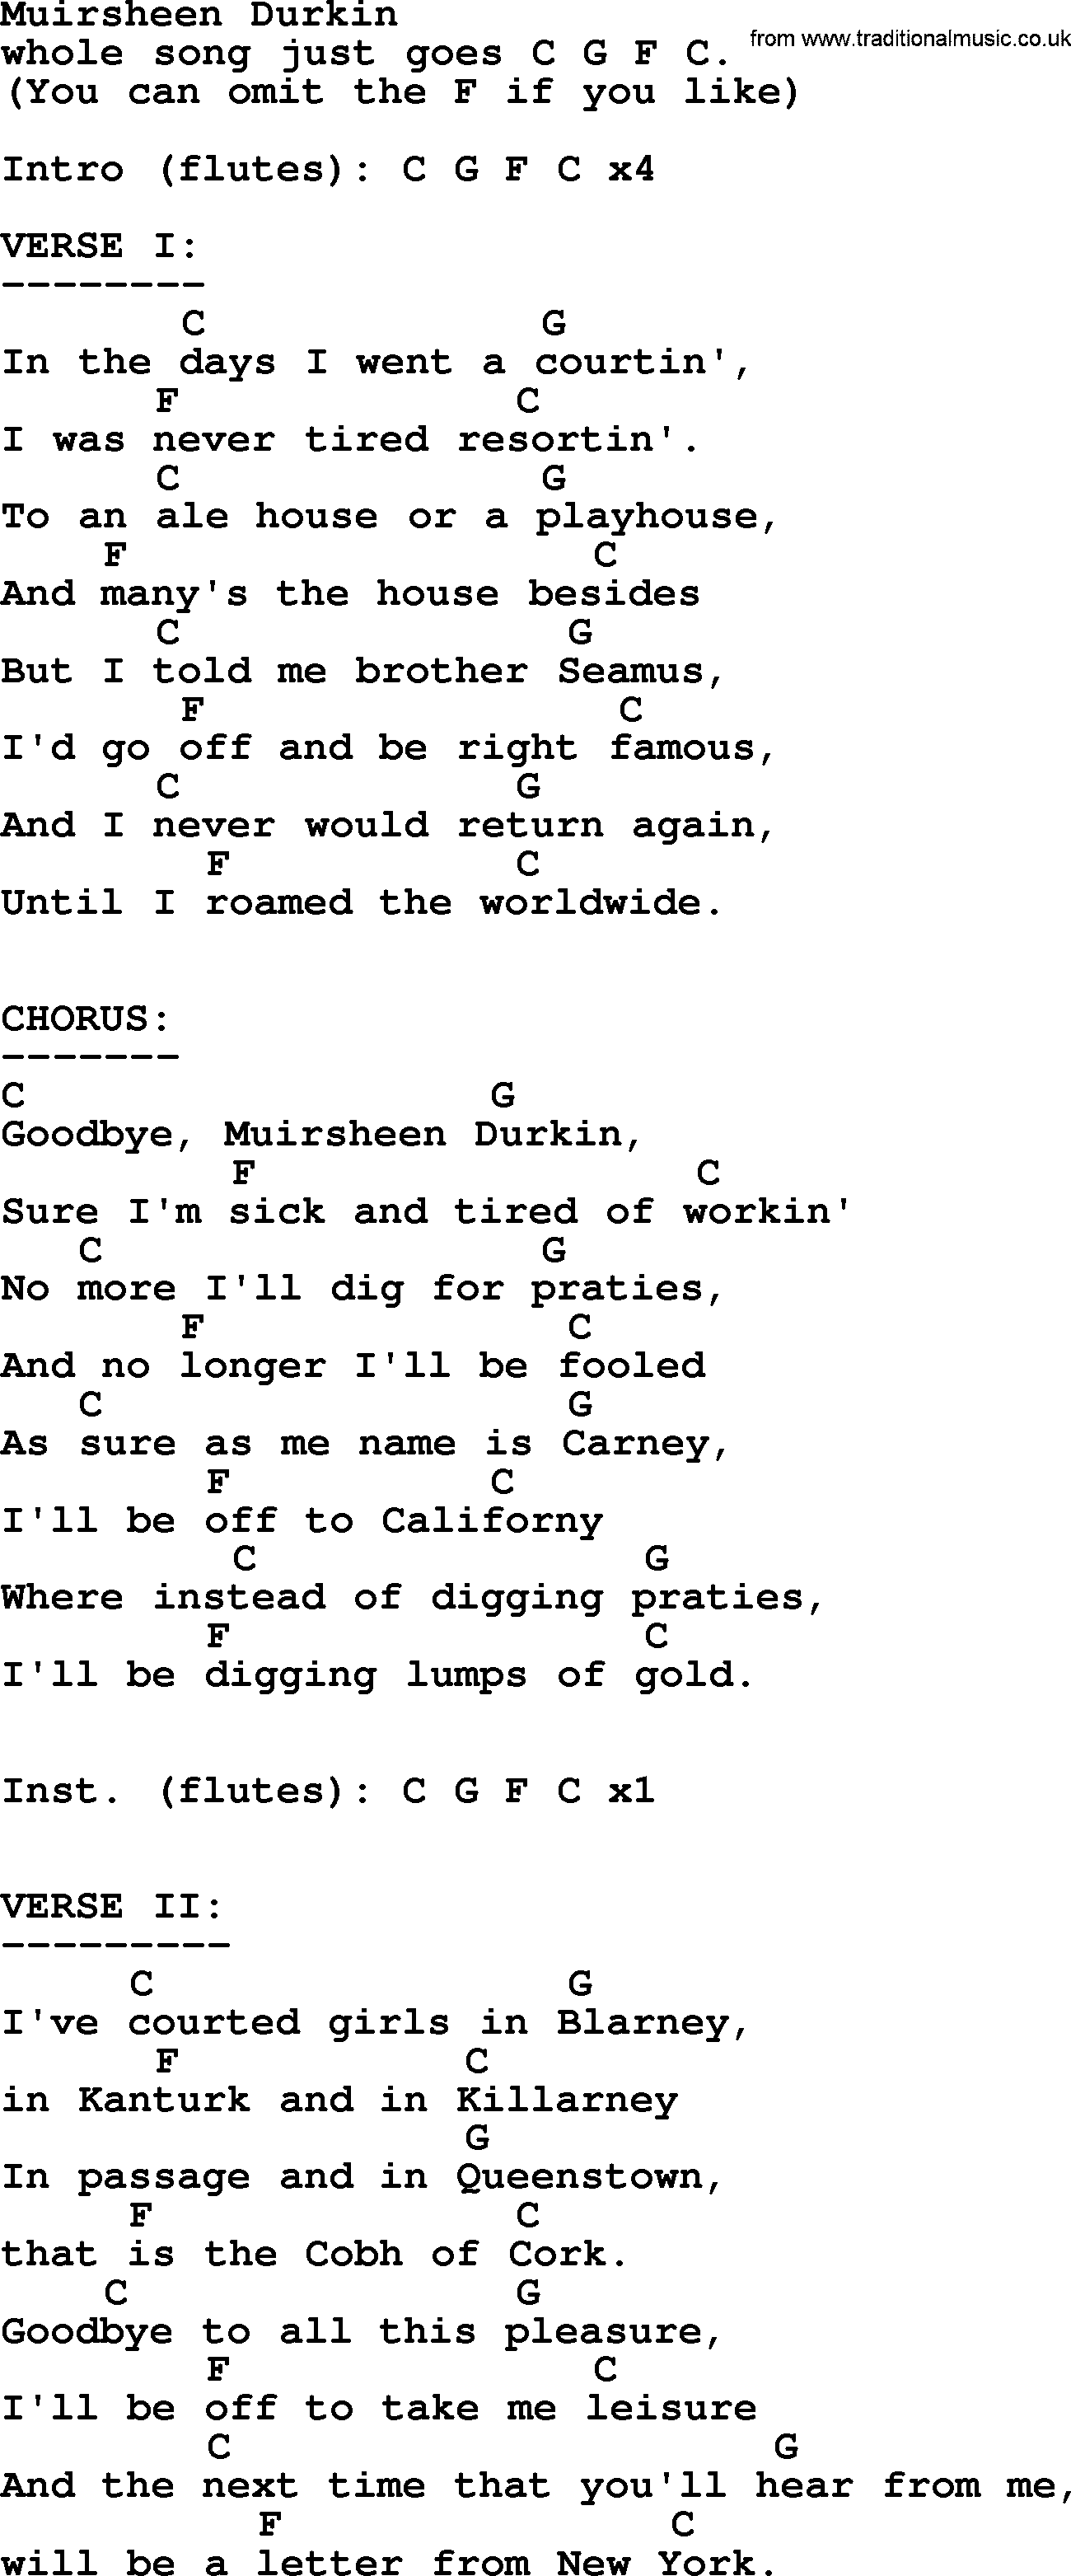 The Dubliners song: Muirsheen Durkin, lyrics and chords